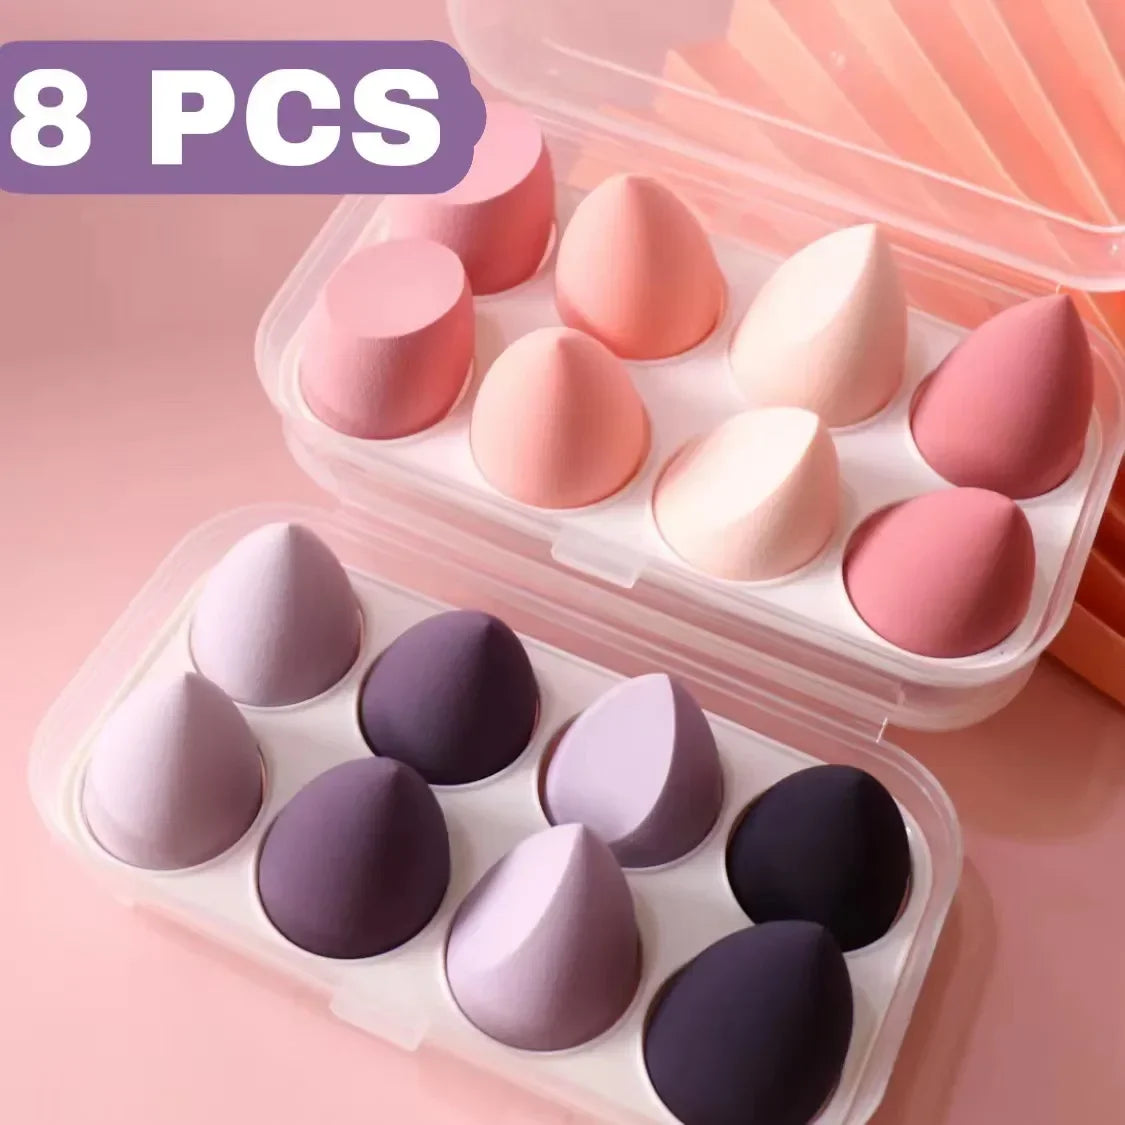 Piece Shape Makeup Sponge Set: Flawless Application Kit for Korean Beauty Looks.